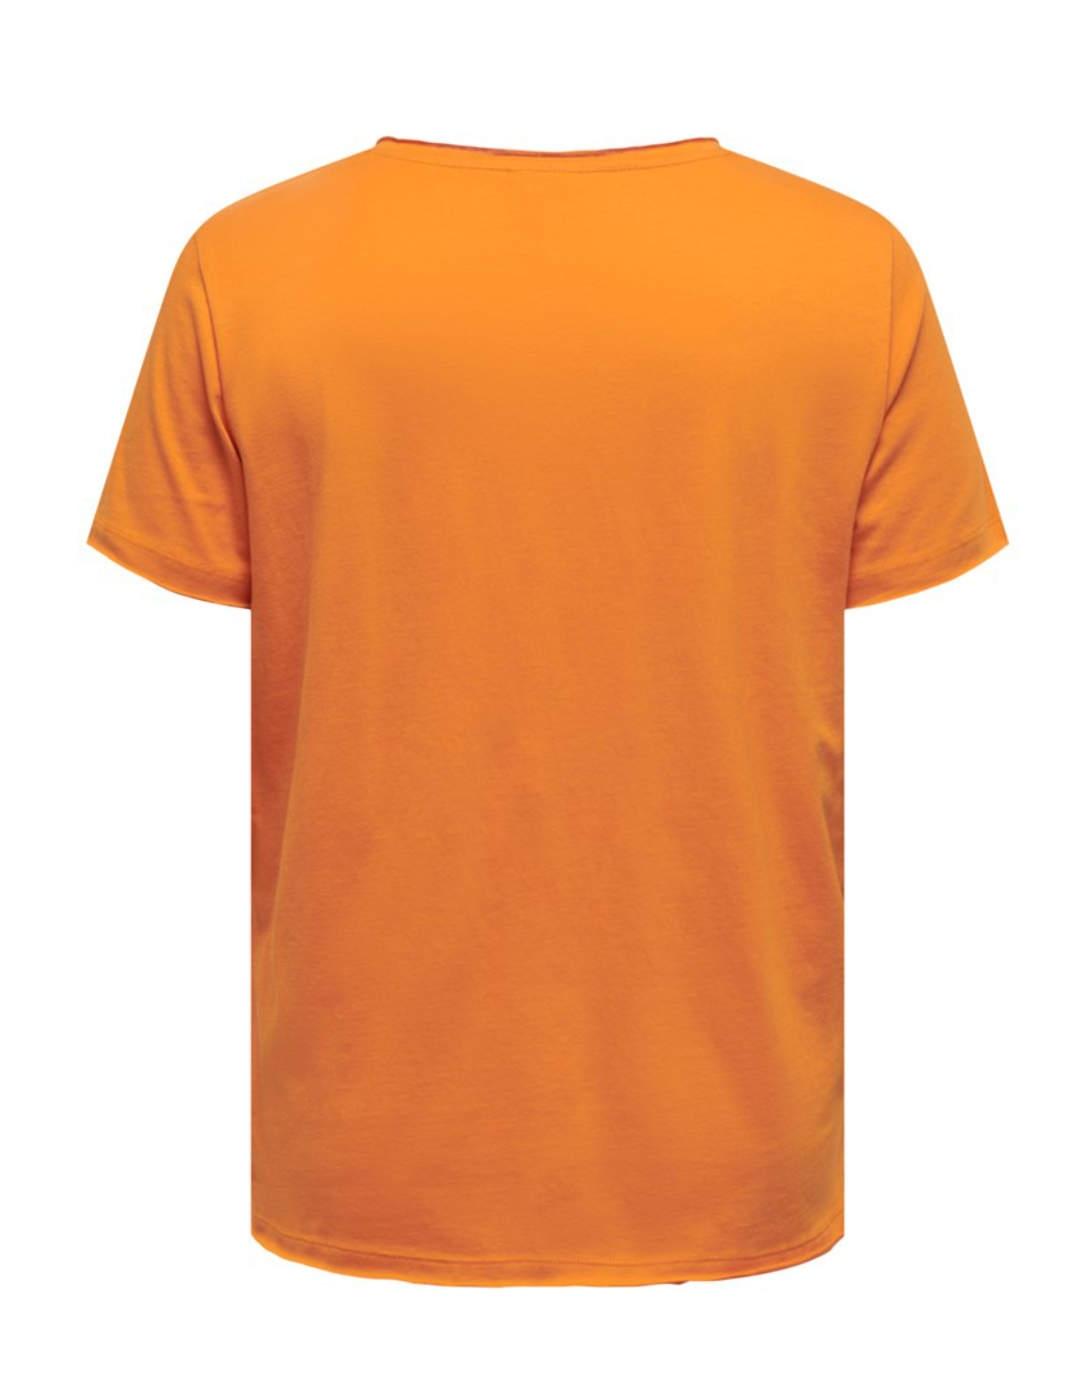 Camiseta Only Carmakoma Quote naranja manga corta de mujer